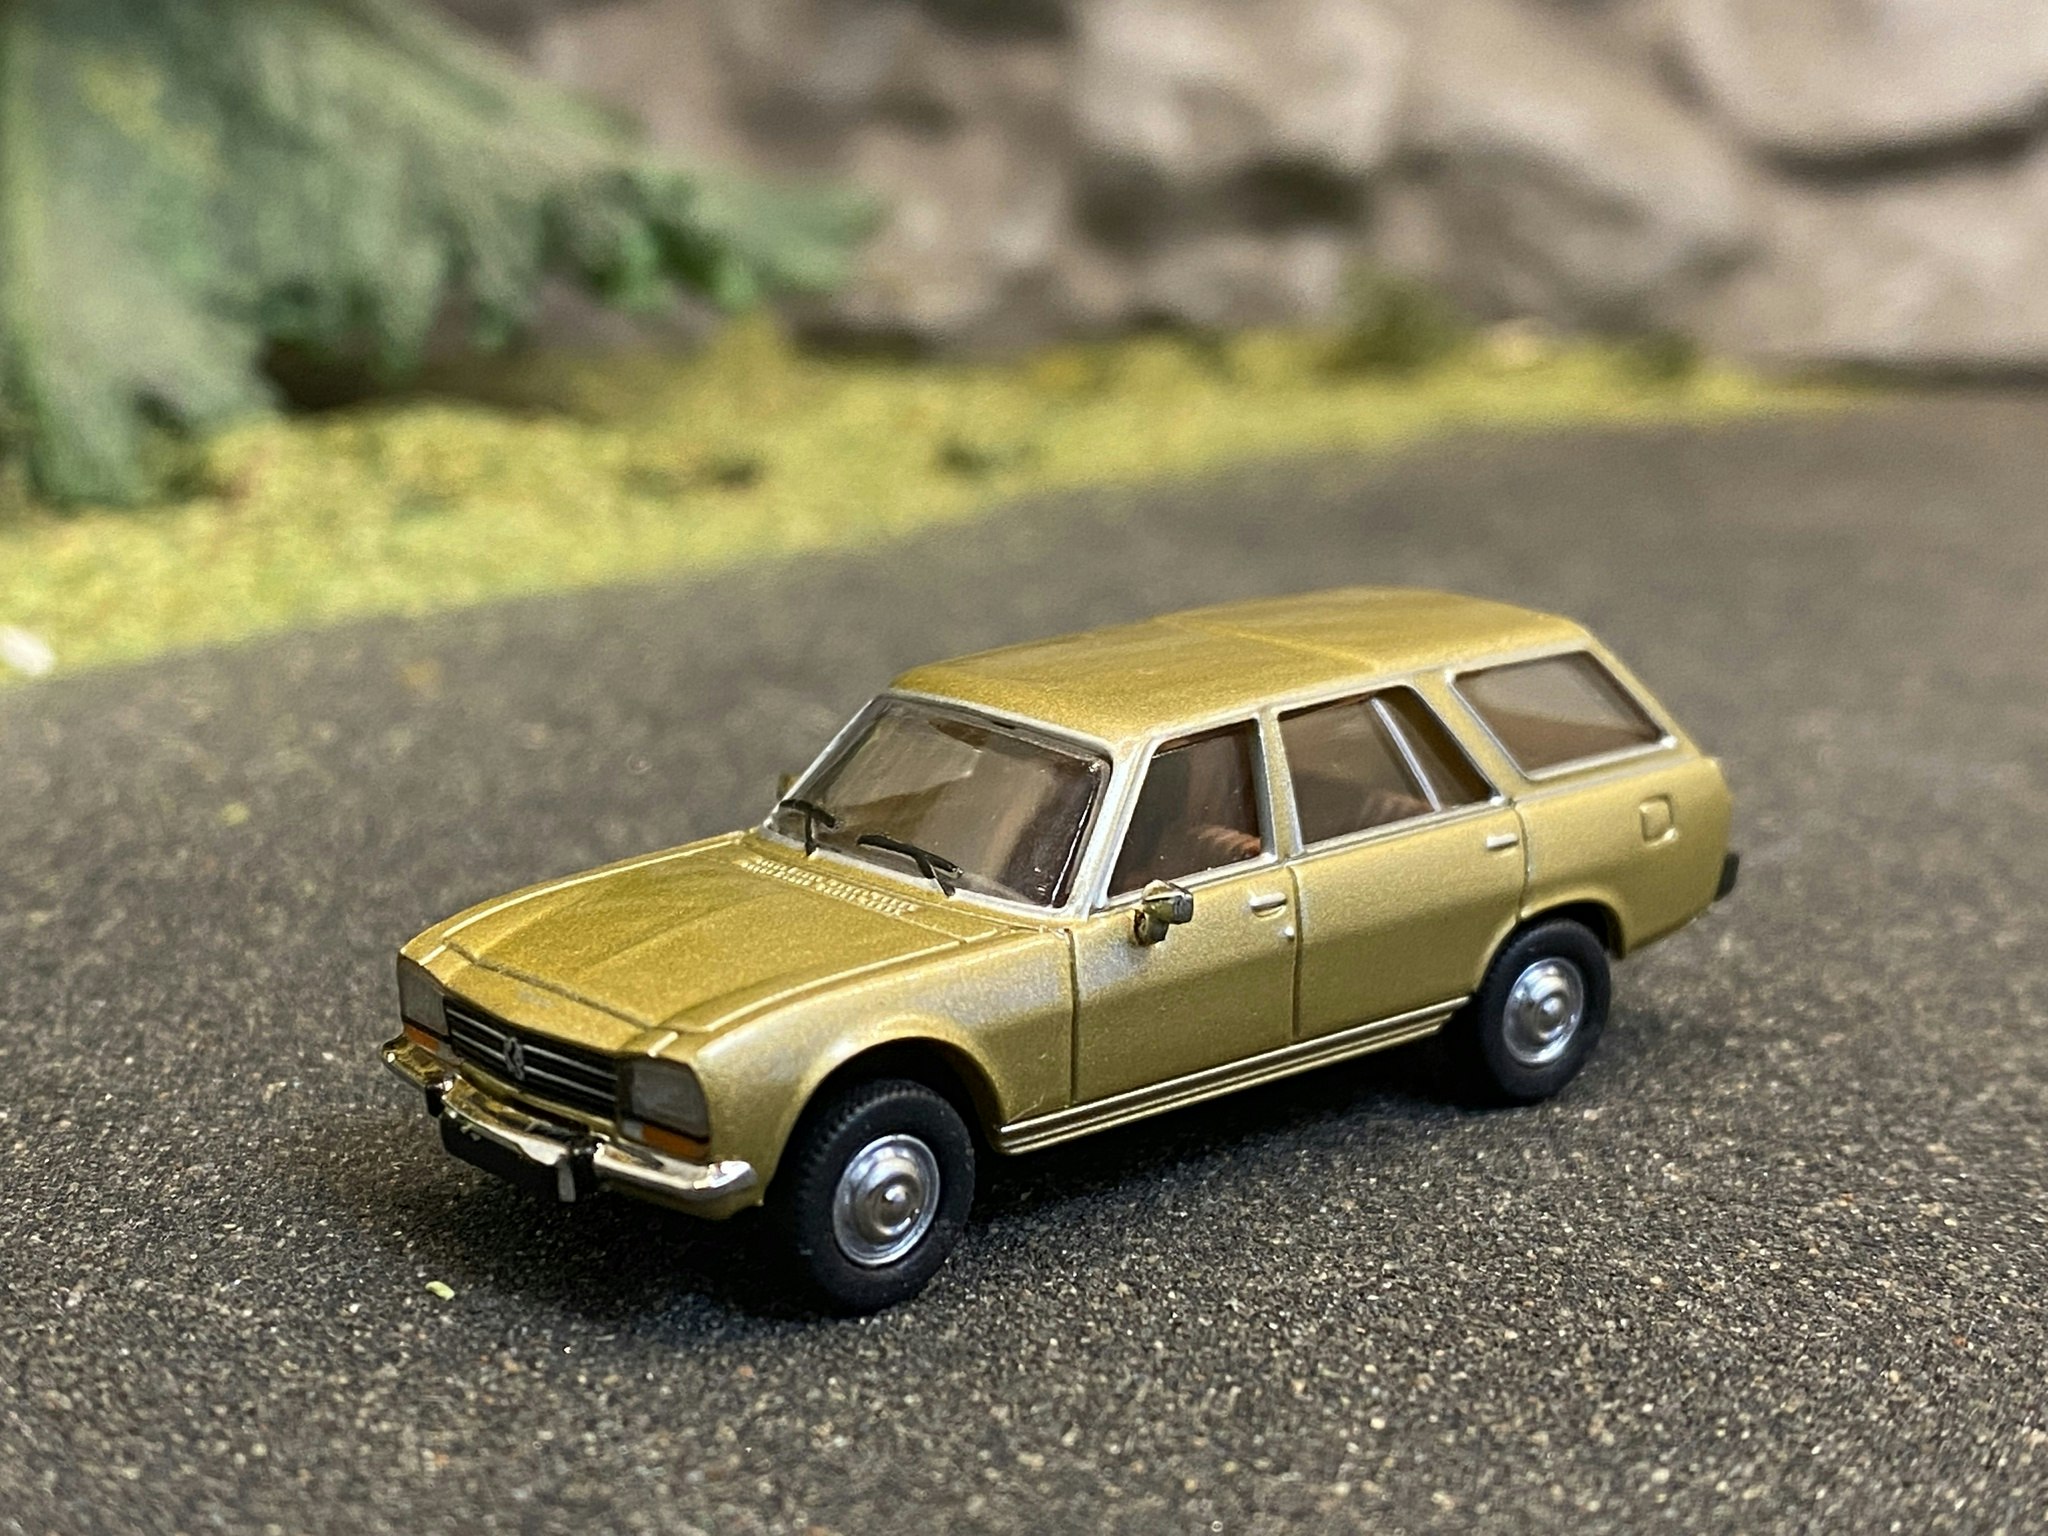 Skala 1/87 - Peugeot 504 Break, Guld metallic från PCX87